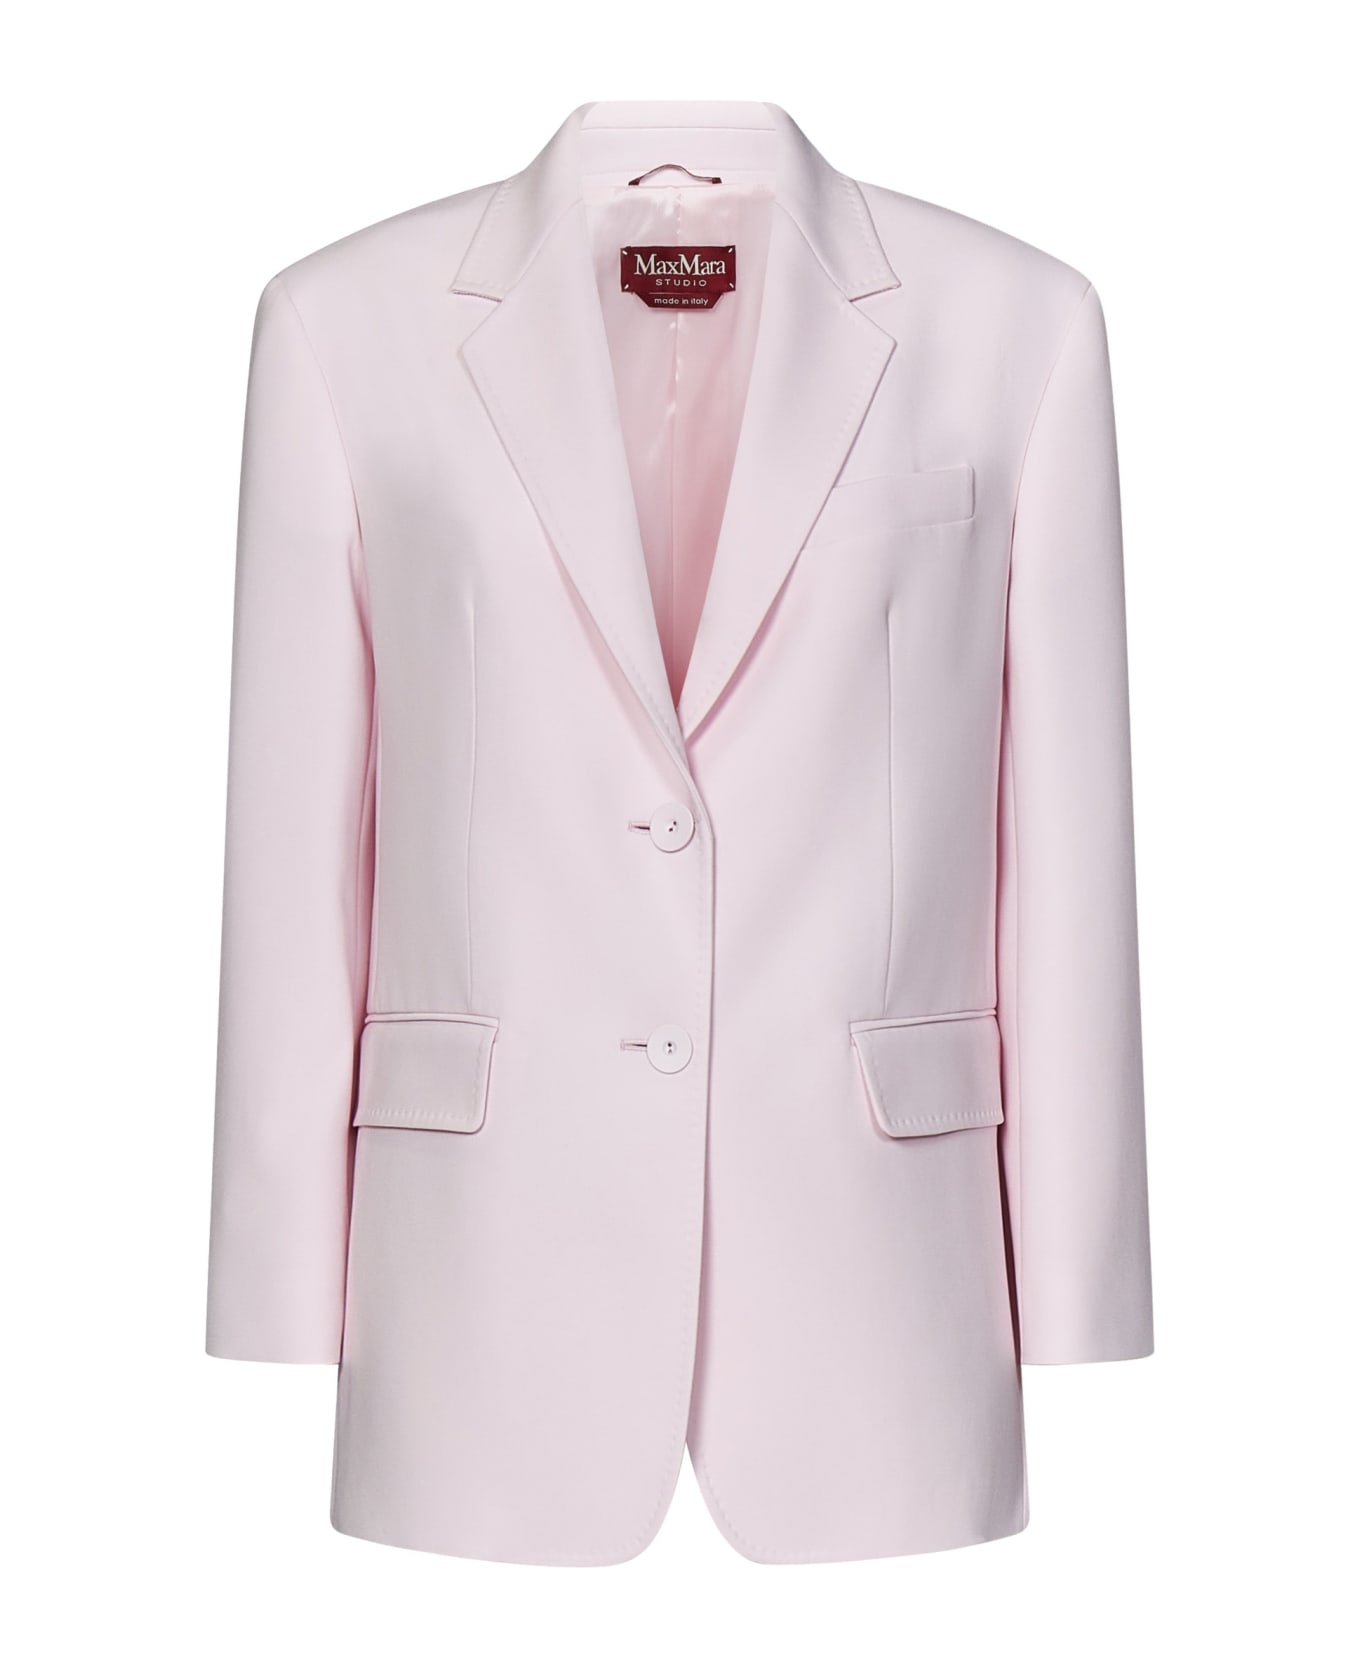 Max Mara Maxmara Studio Suit - Pink ブレザー